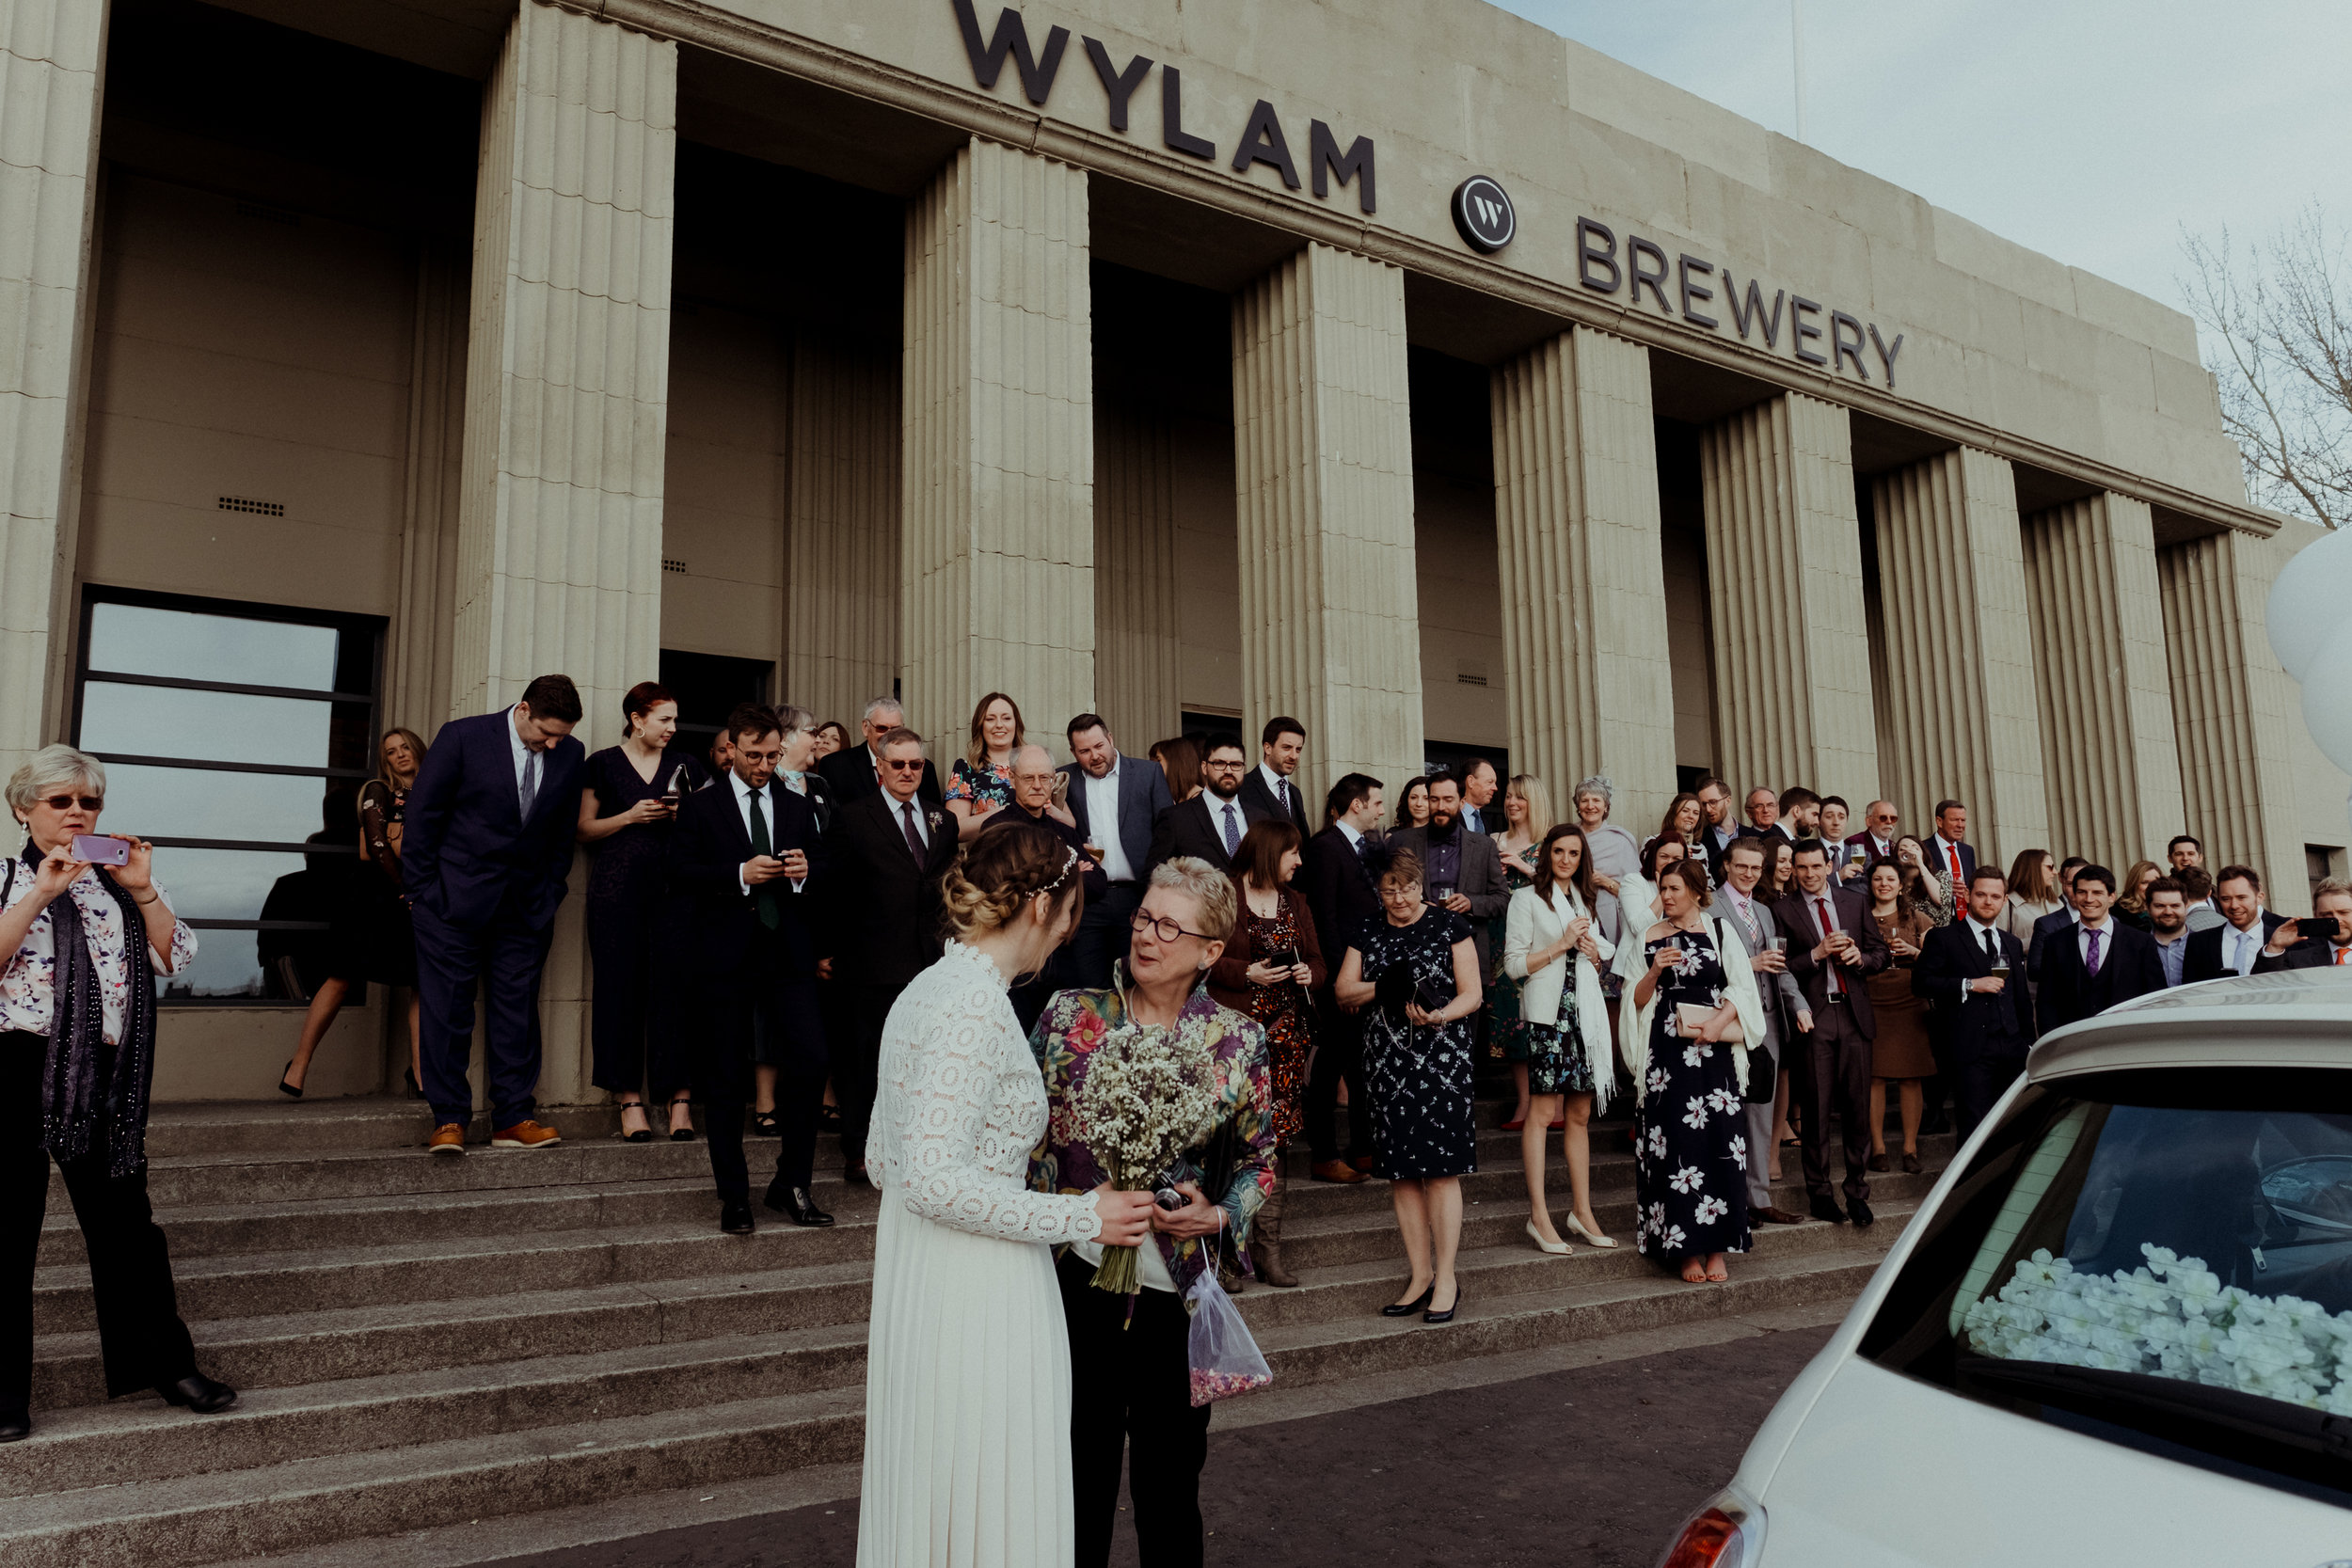 WYLAM-BREWERY-WEDDING-PHOTOGRAPHER-87.jpg